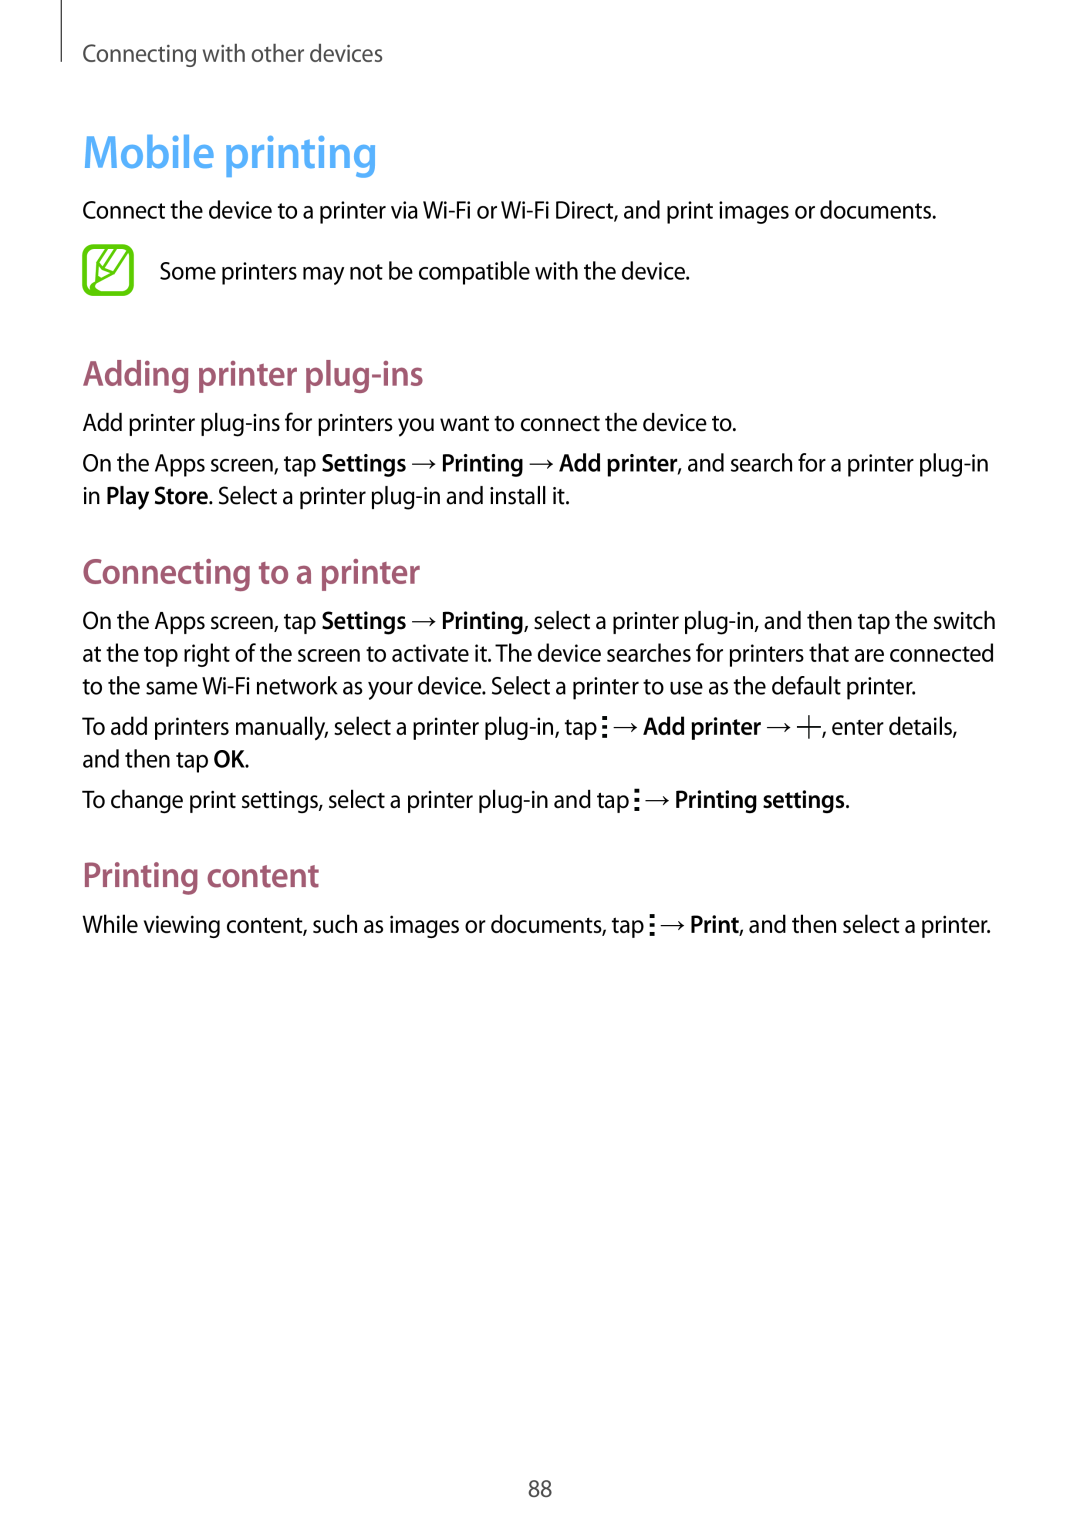 Samsung SM-G357FZAANEE, SM-G357FZWZXEO Mobile printing, Adding printer plug-ins, Connecting to a printer, Printing content 